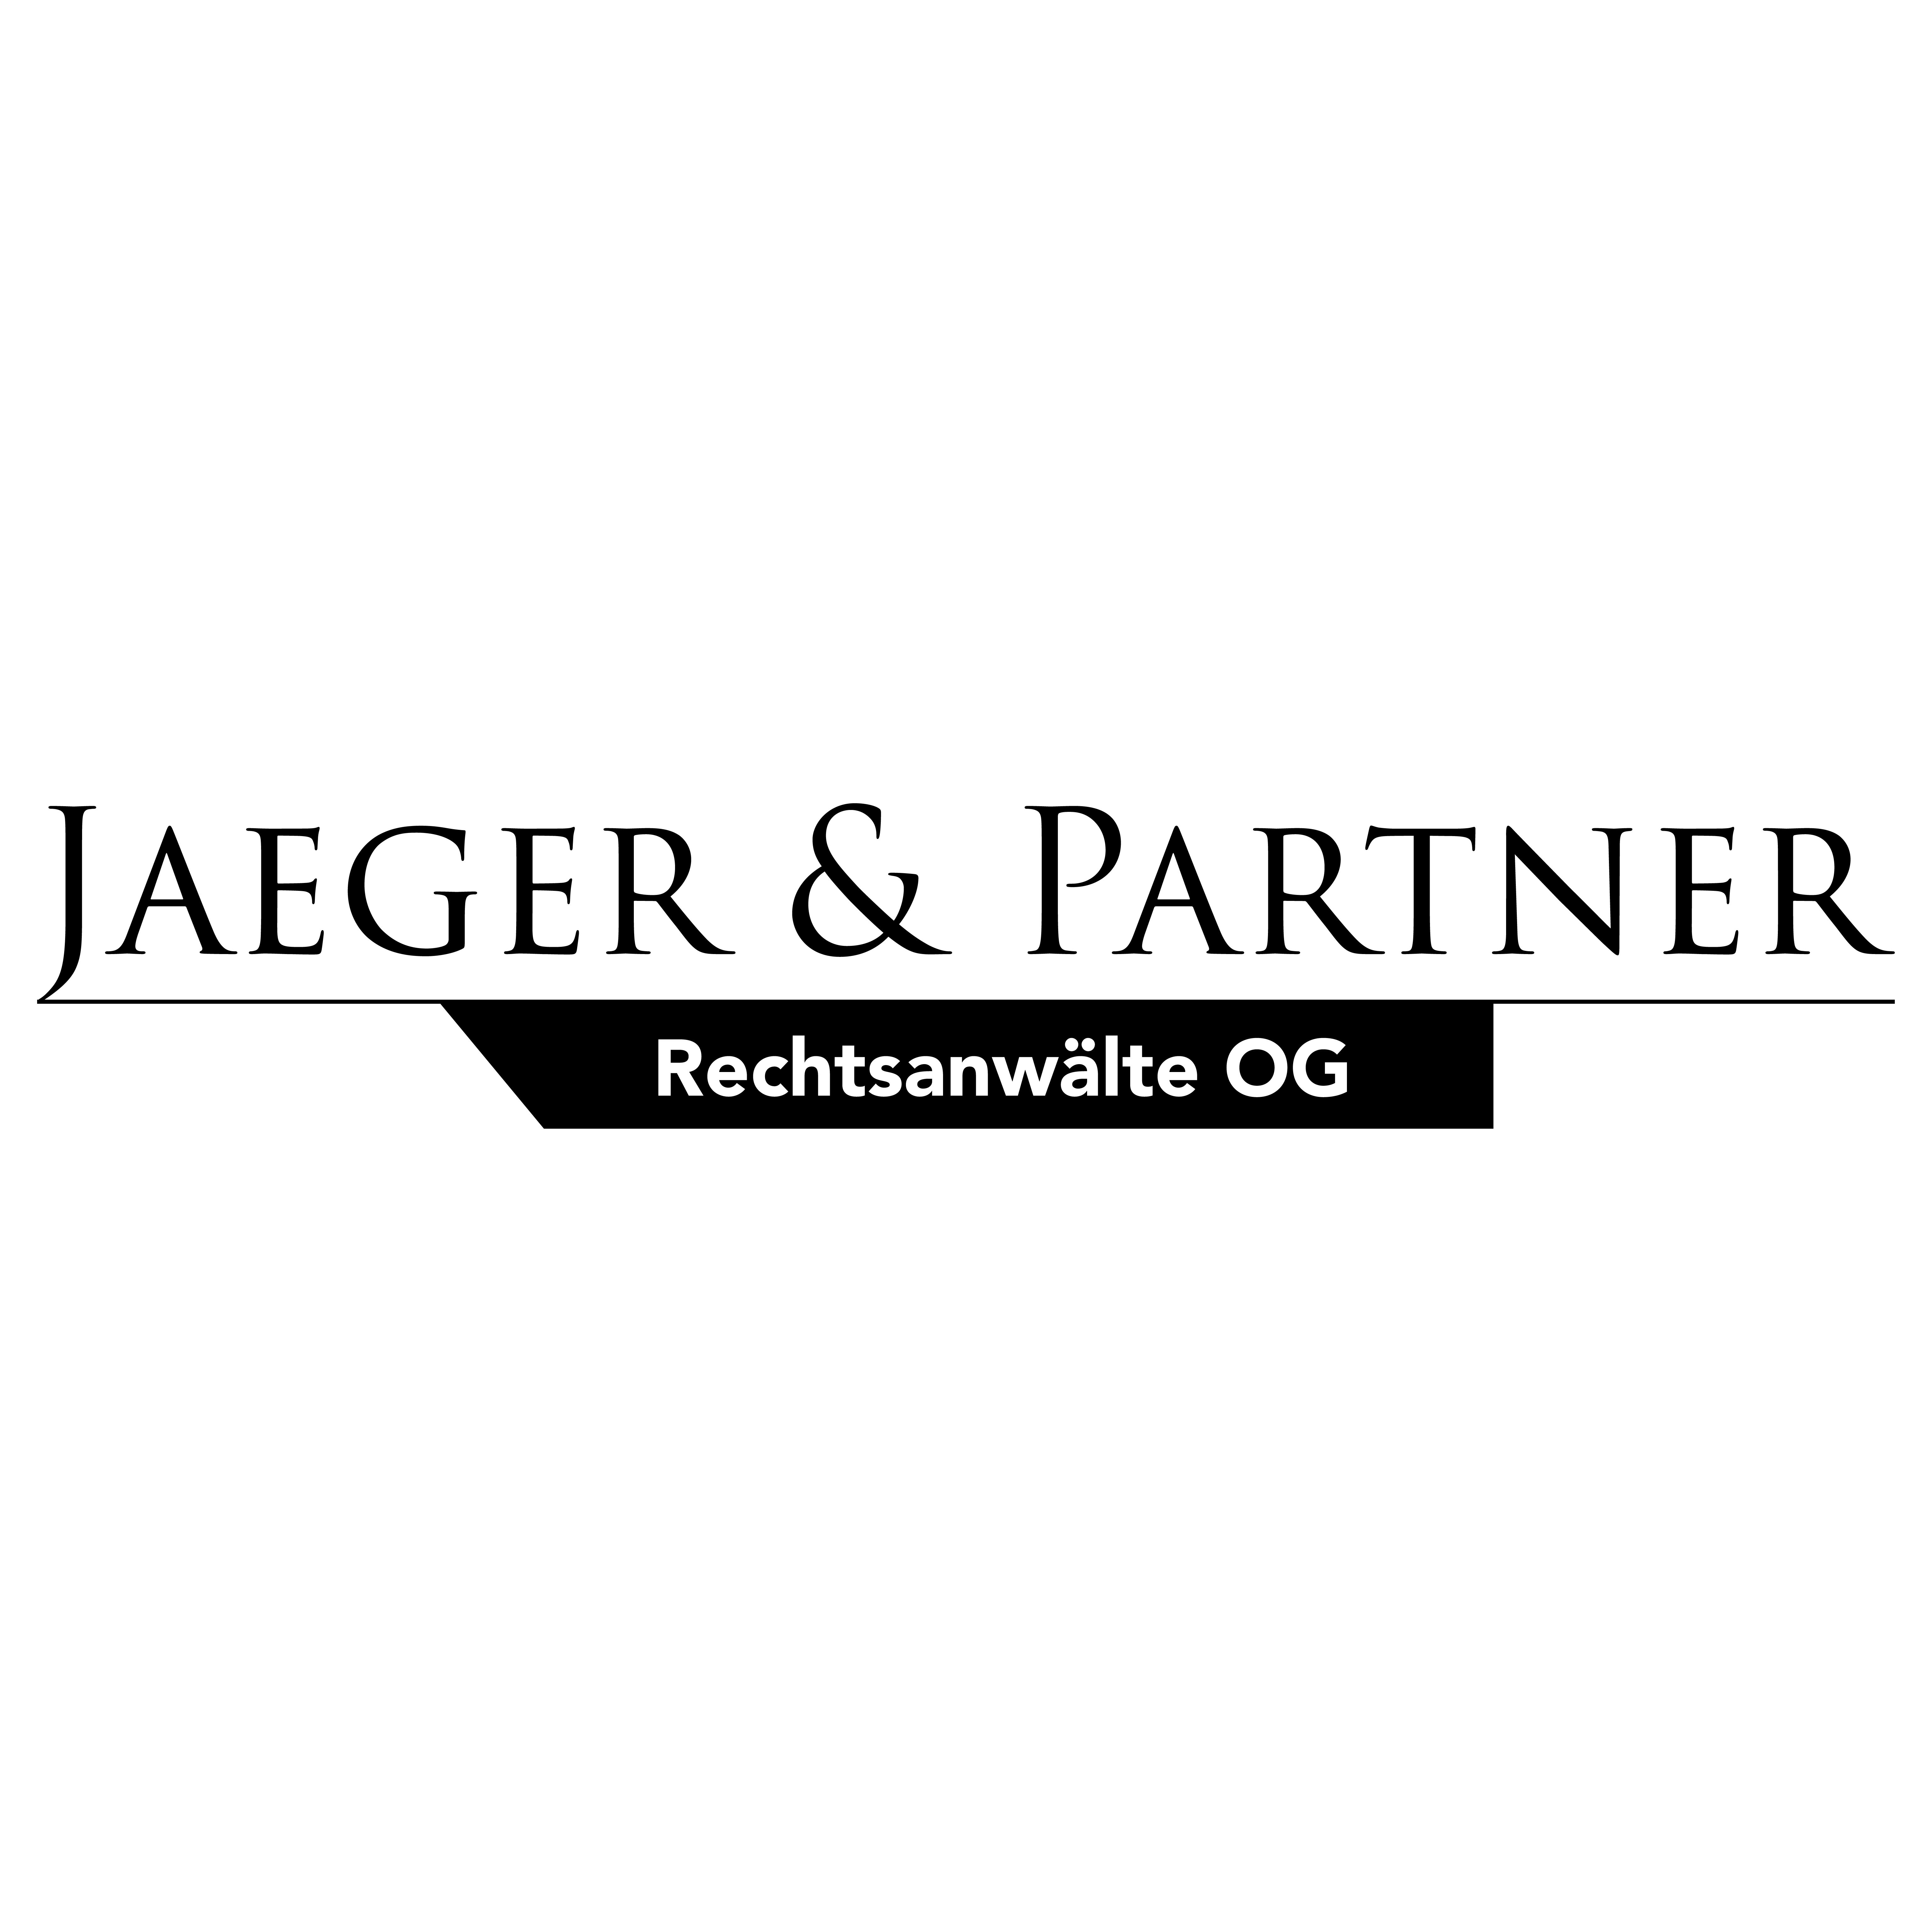 JAEGER & Partner Rechtsanwälte OG in Linz